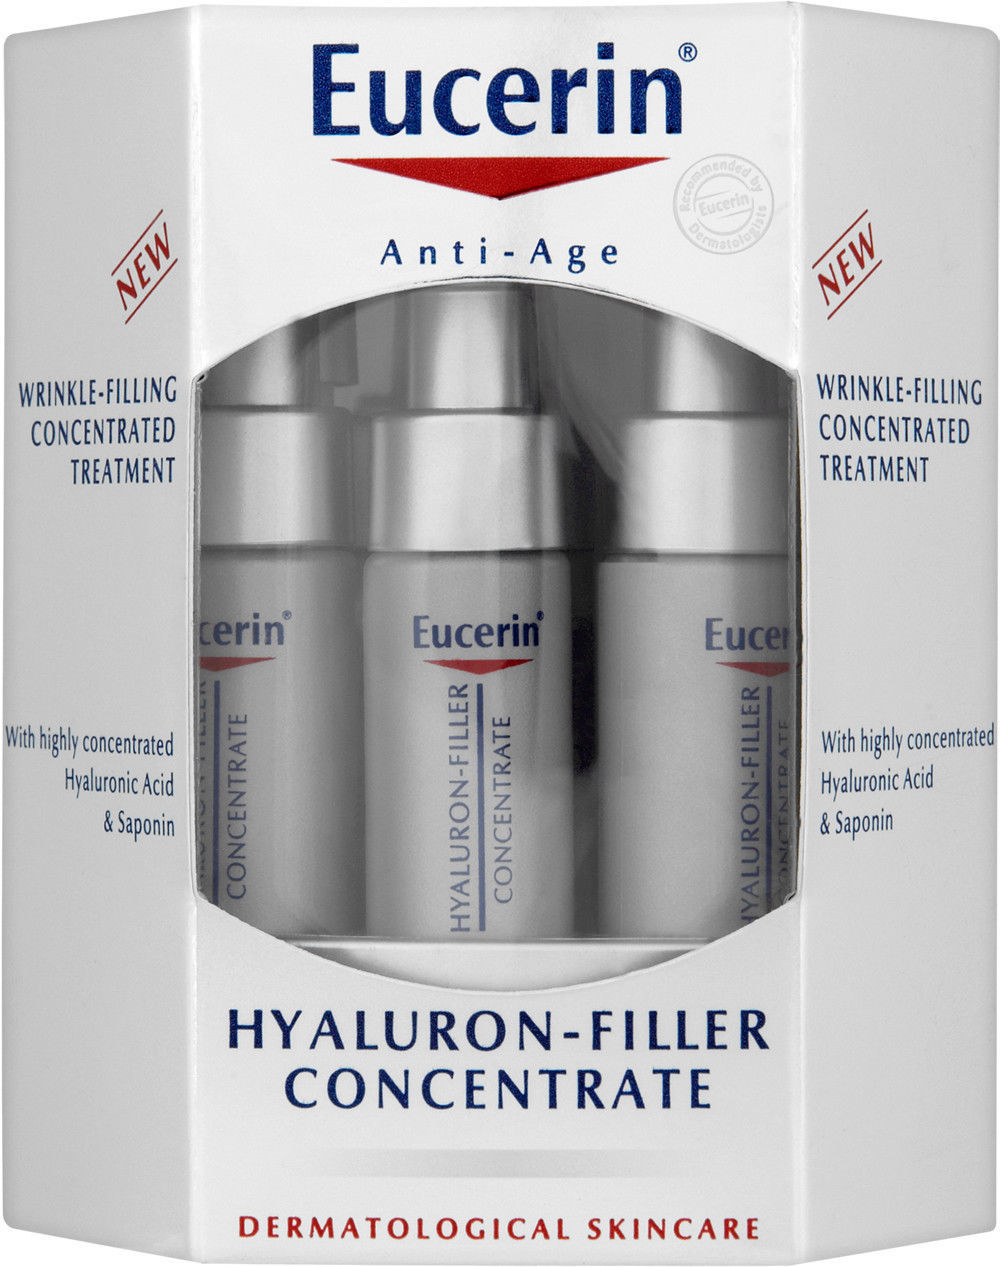 Eucerin Hylaron filler serum 6x5ml Anti Age Anti Wrinkle 30ml total - $46.03